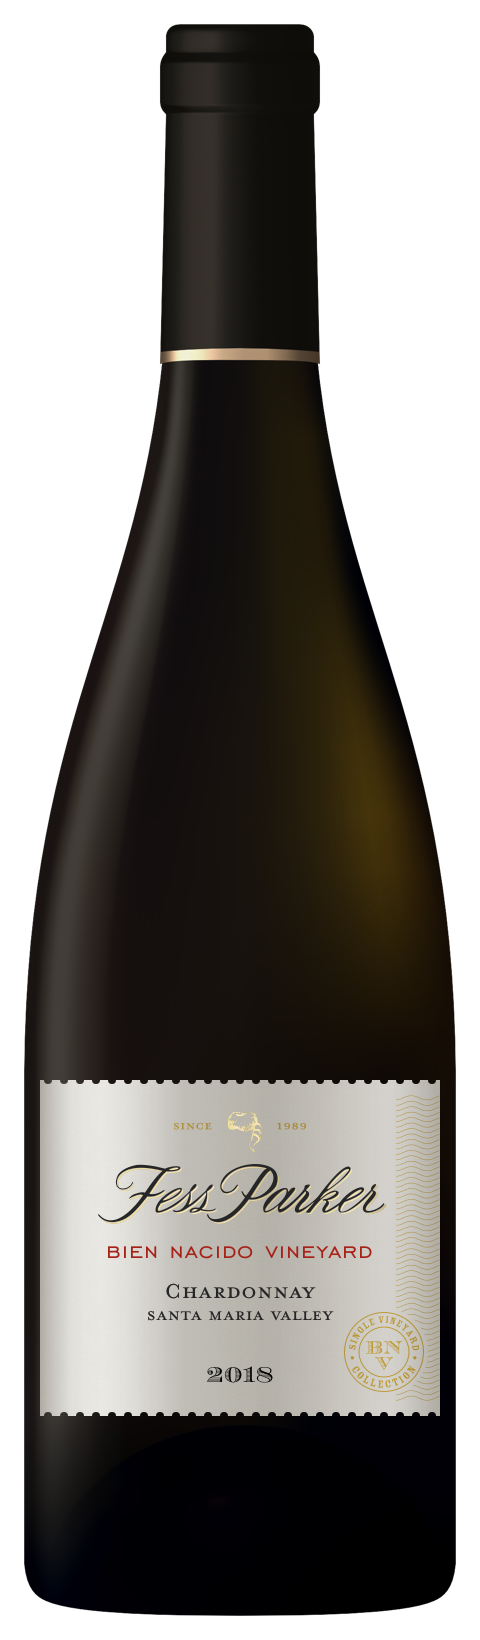 Bottle shot of Bien Nacido Vineyard Chardonnay